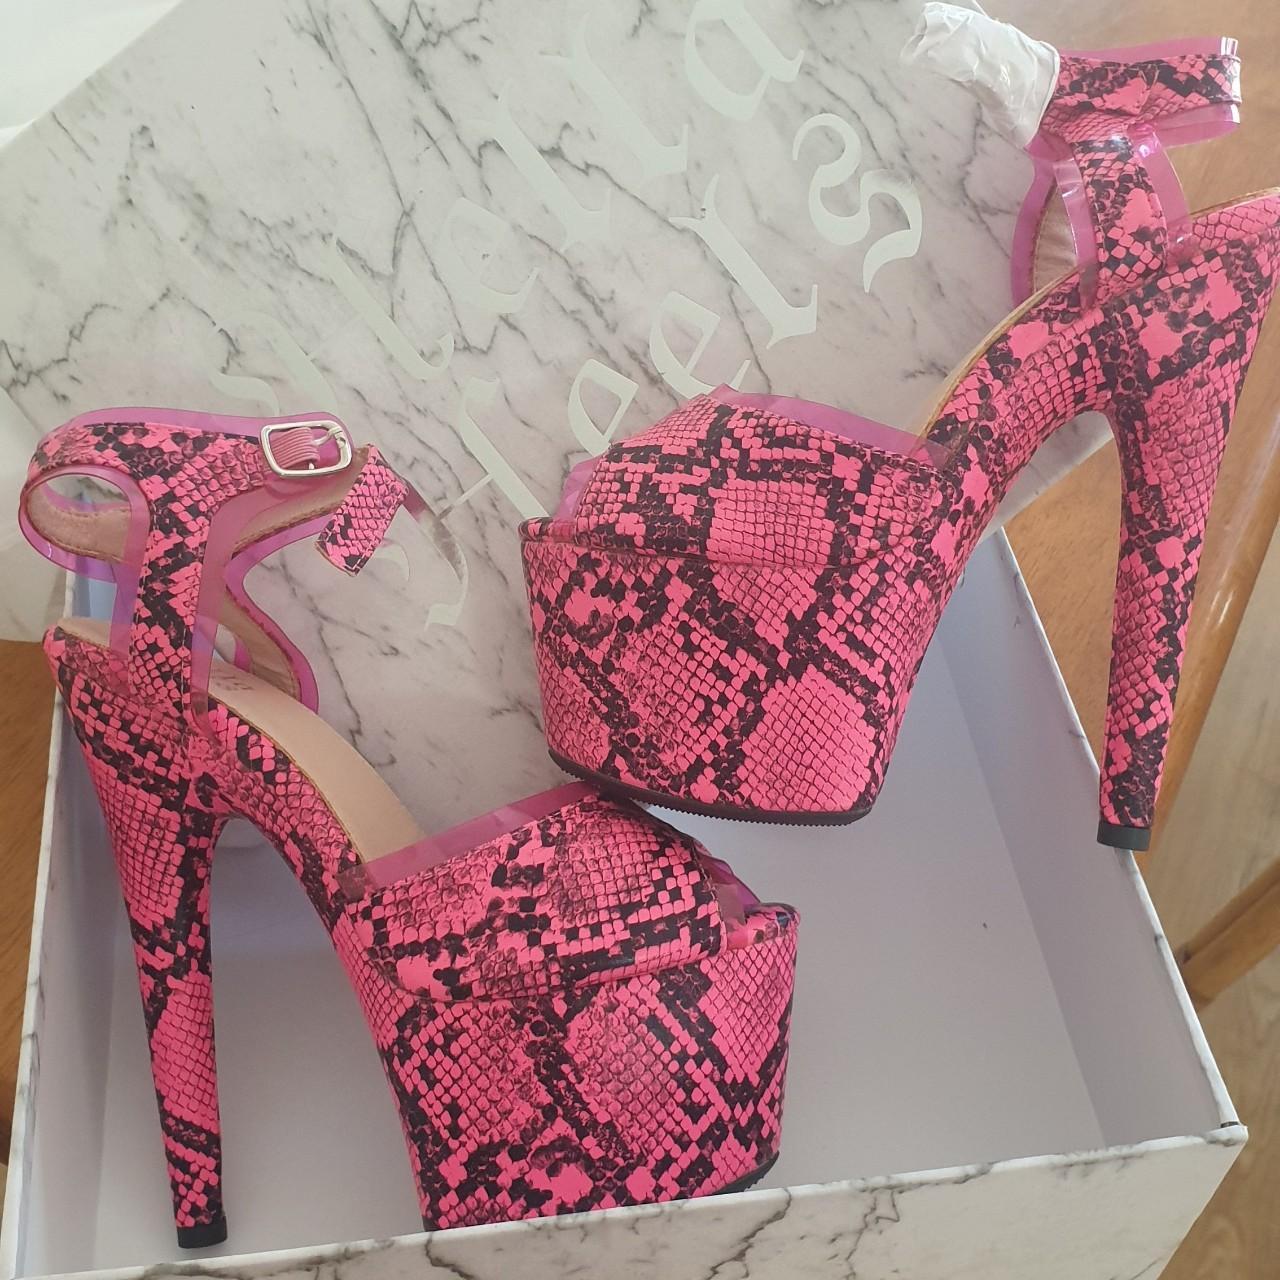 Hella Heels Hot Pink Hissy Fit 7 inch sandals Never... - Depop